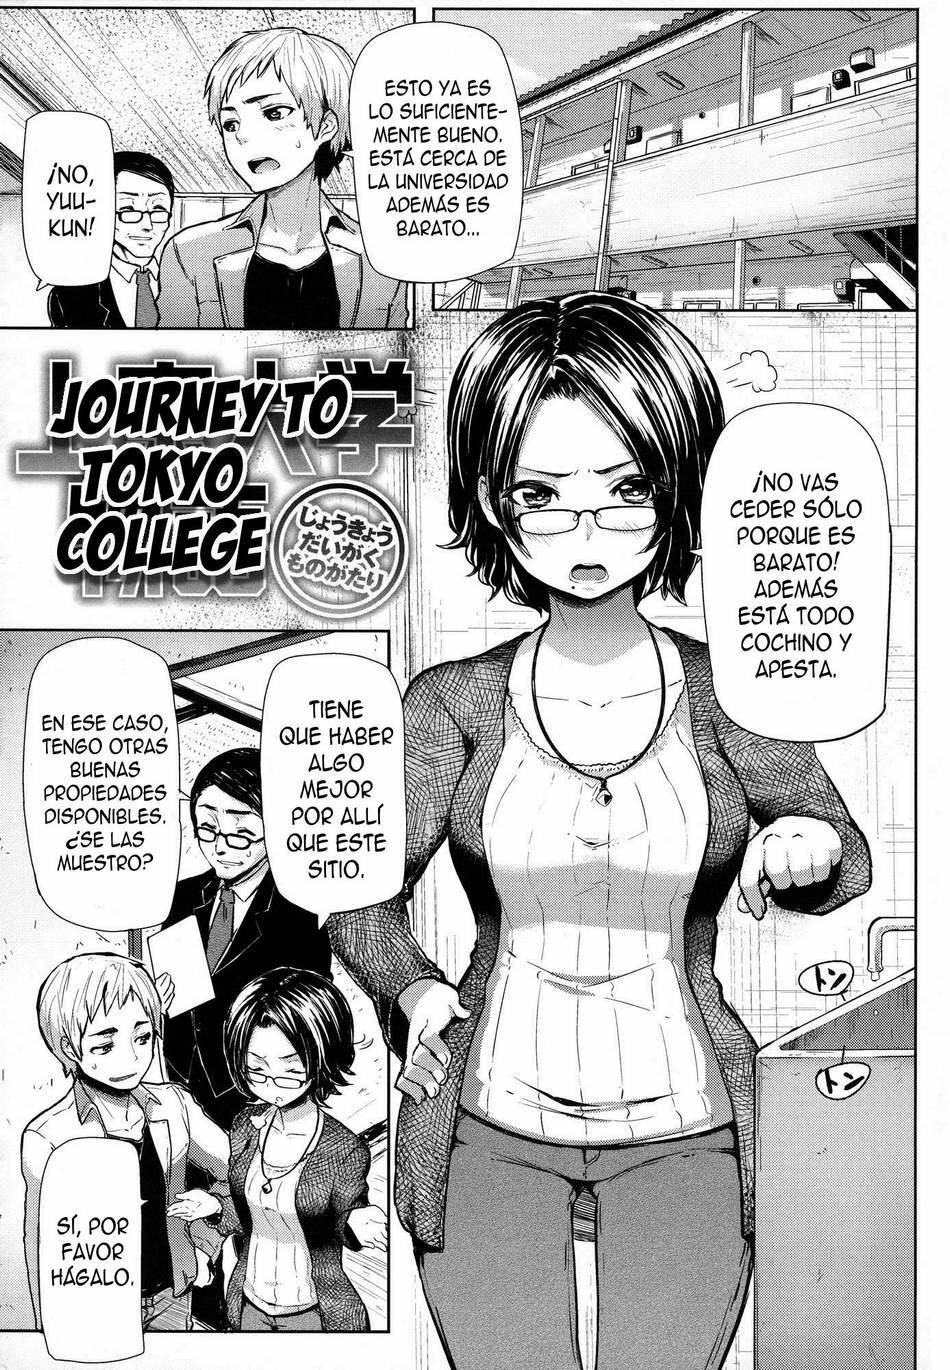 Journey to Tokyo College - 0